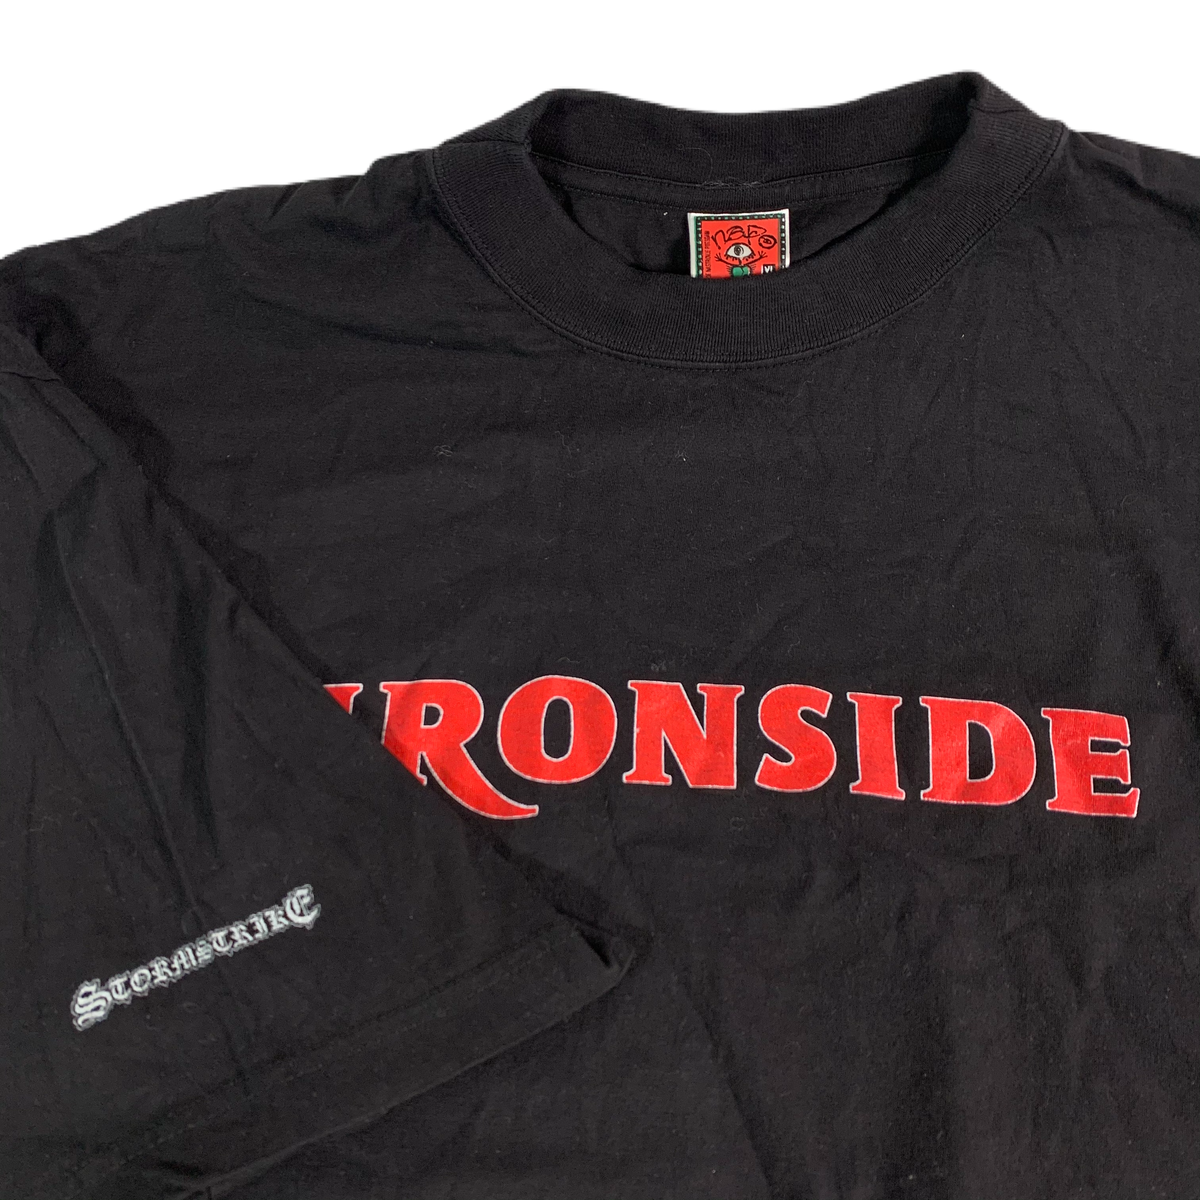 Vintage Ironside &quot;Stormstrike&quot; T-Shirt